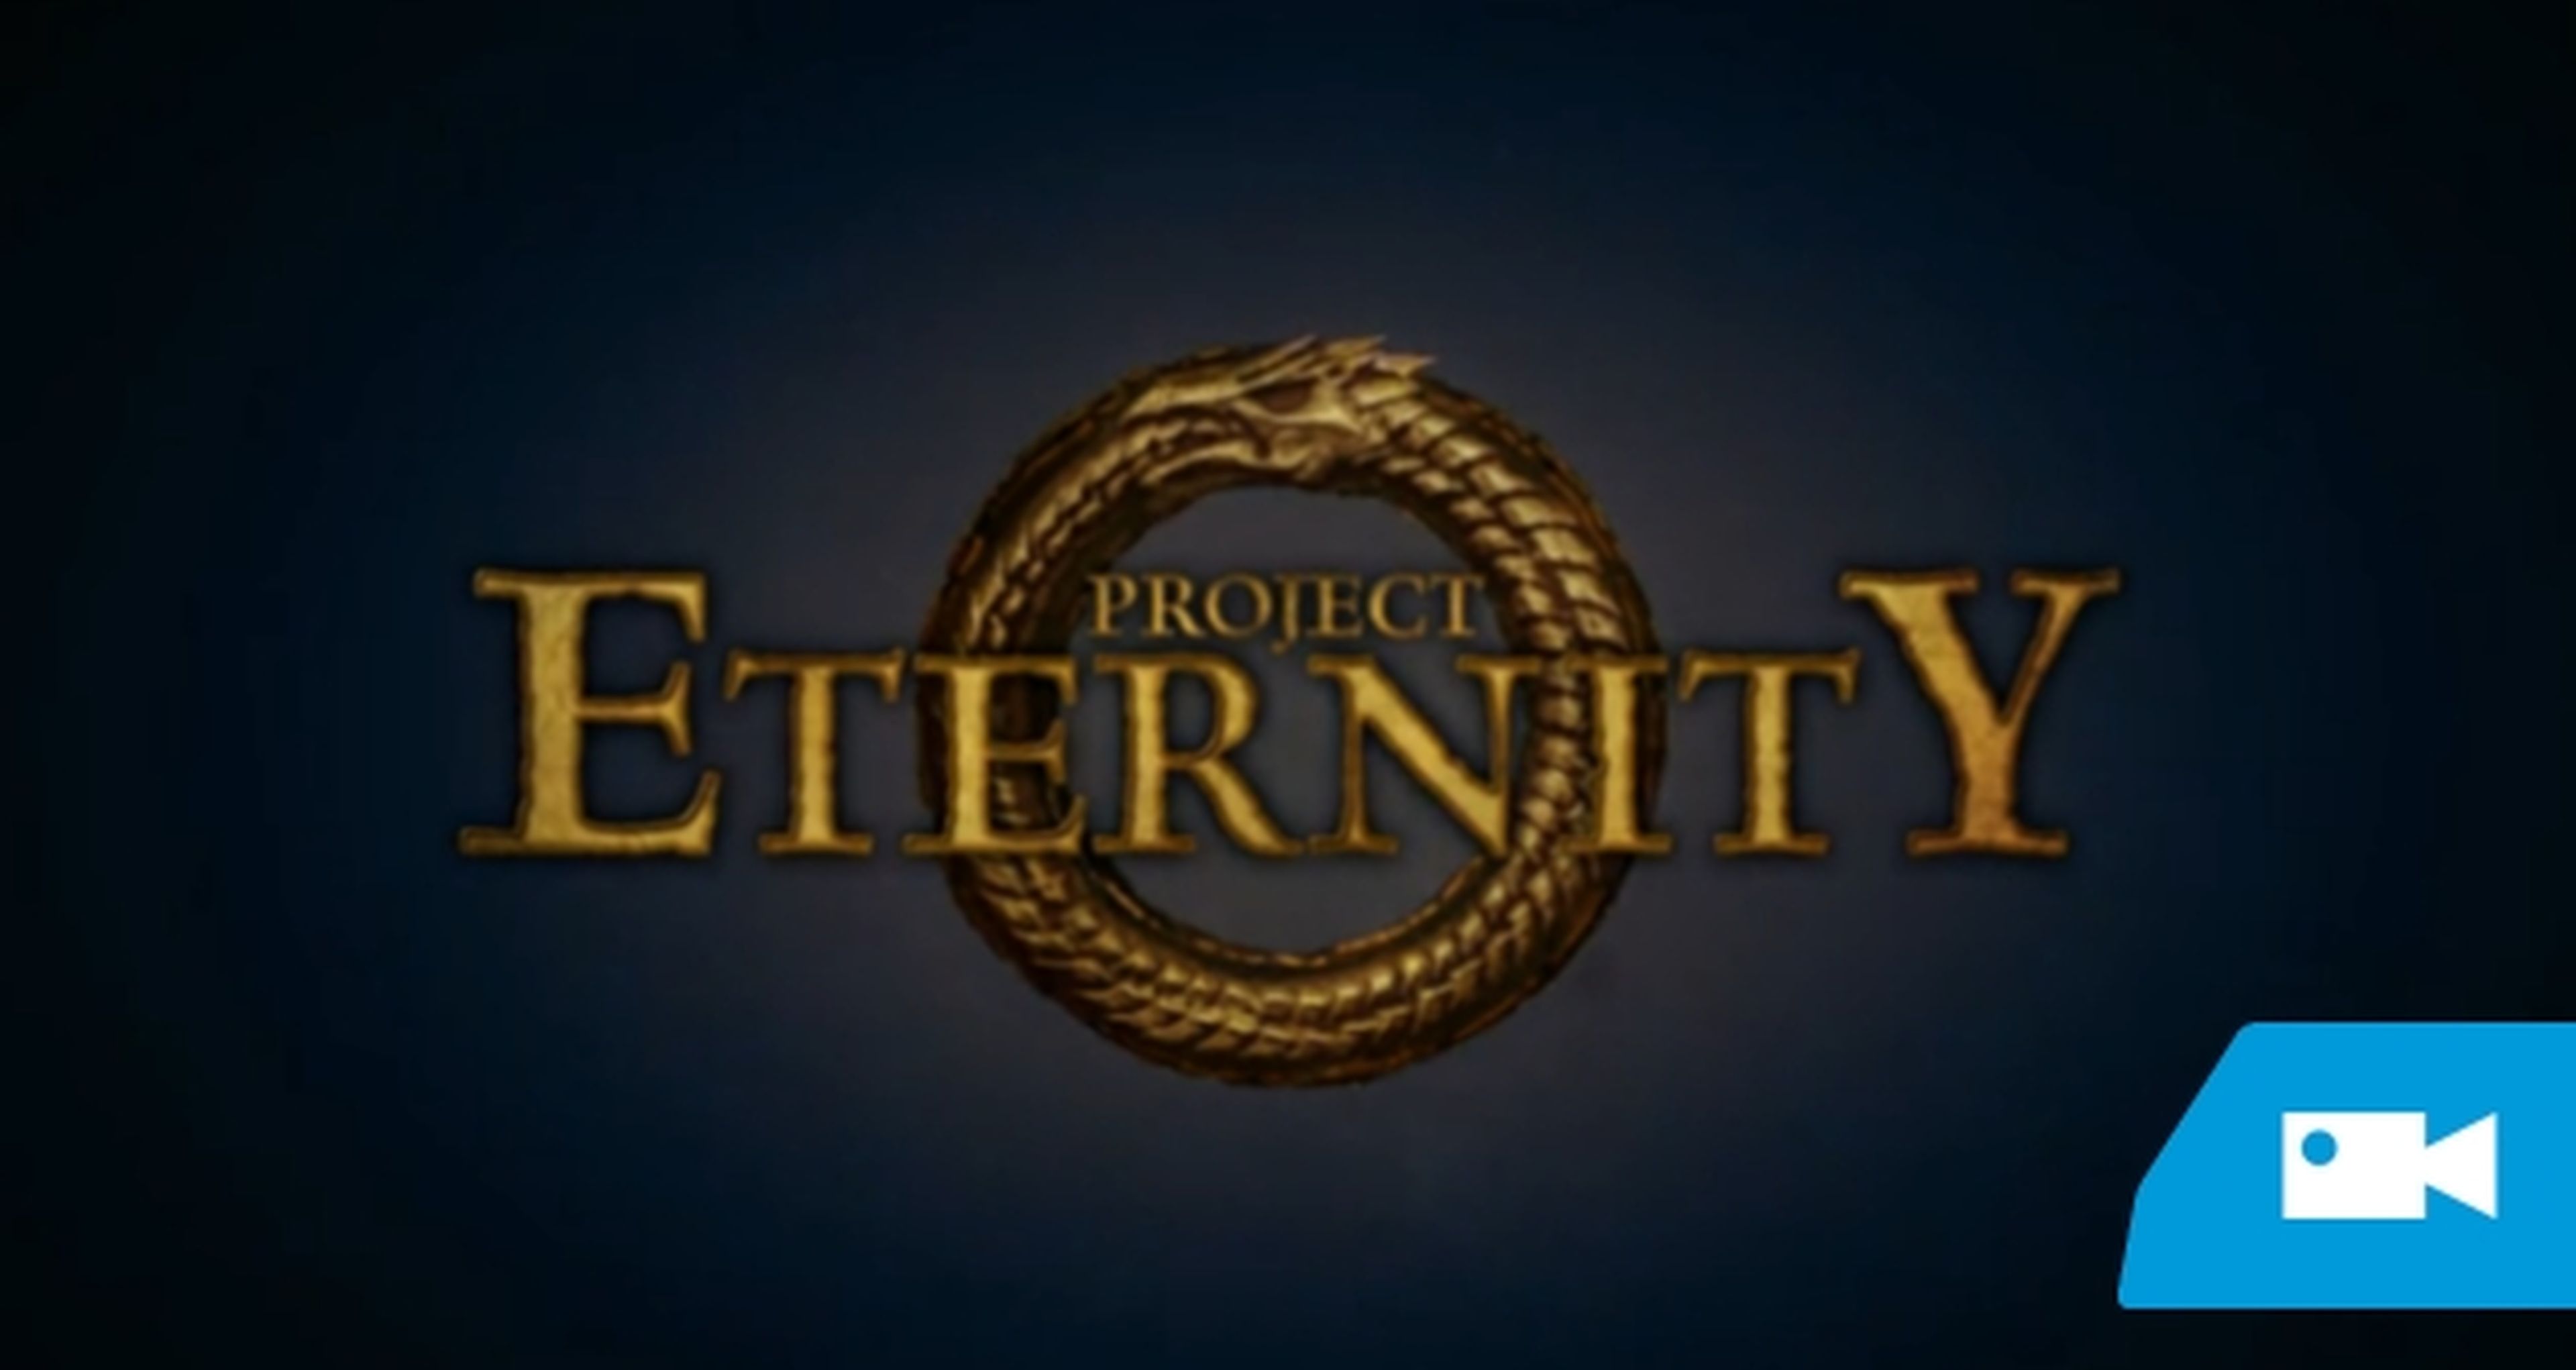 Project Eternity ya es una realidad